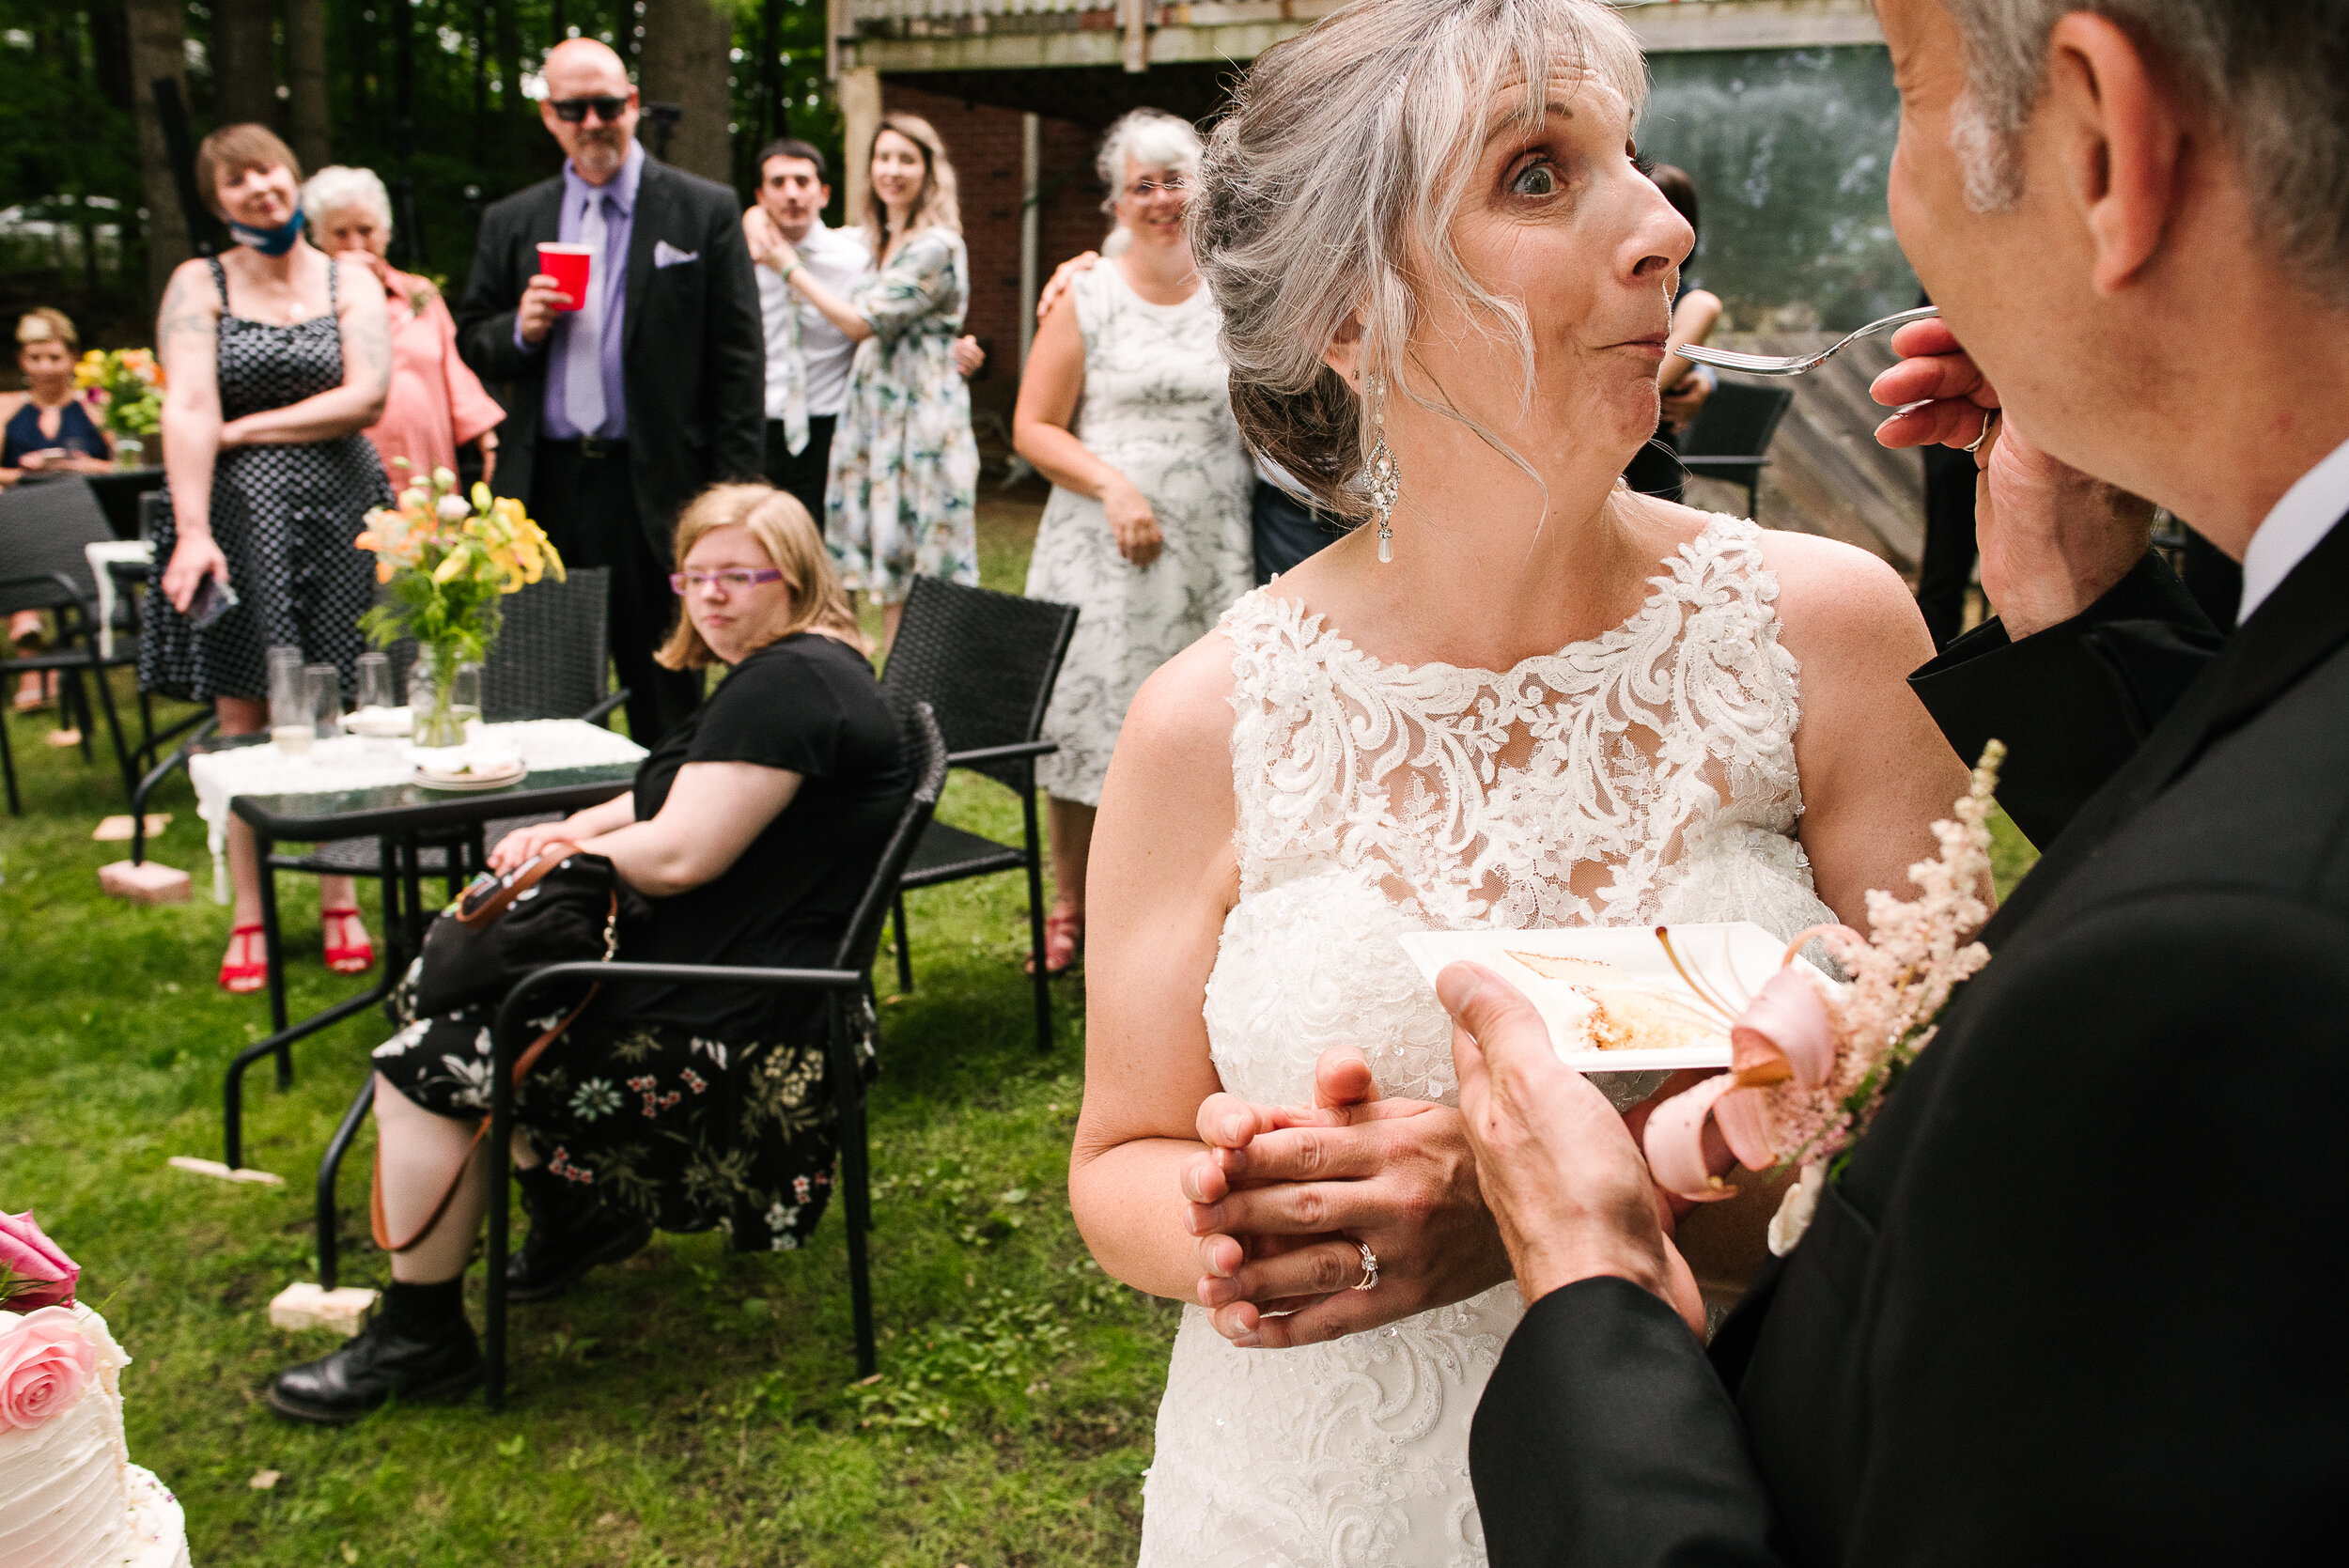 Groom feeding bride cake at Verona, Ontario wedding 